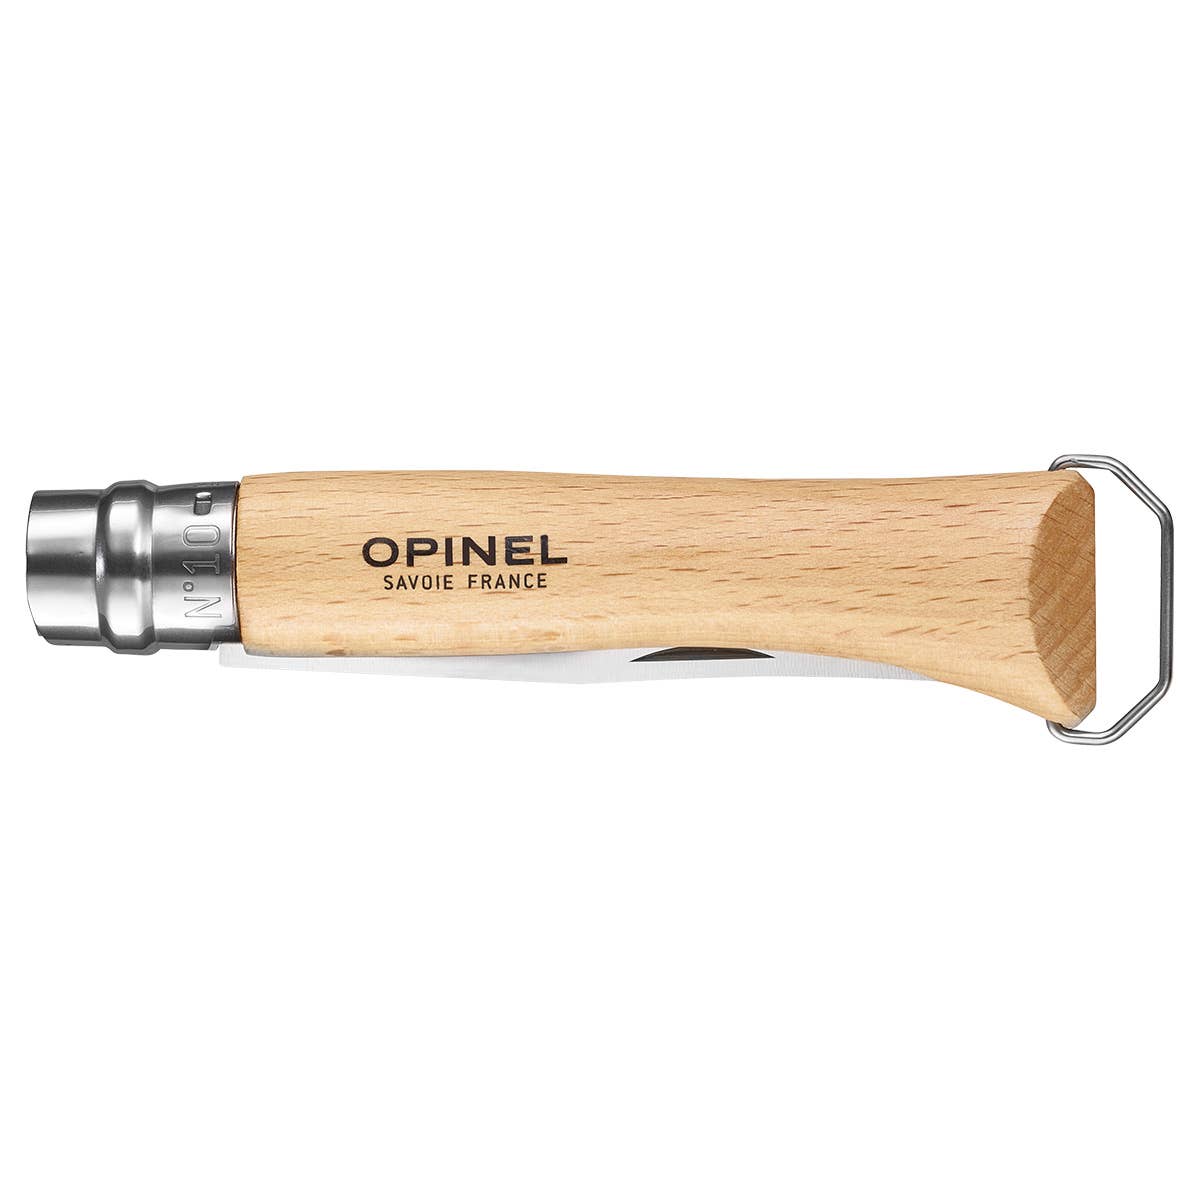 Opinel - Blister Pack No.10 Corkscrew with Bottle Opener Knives